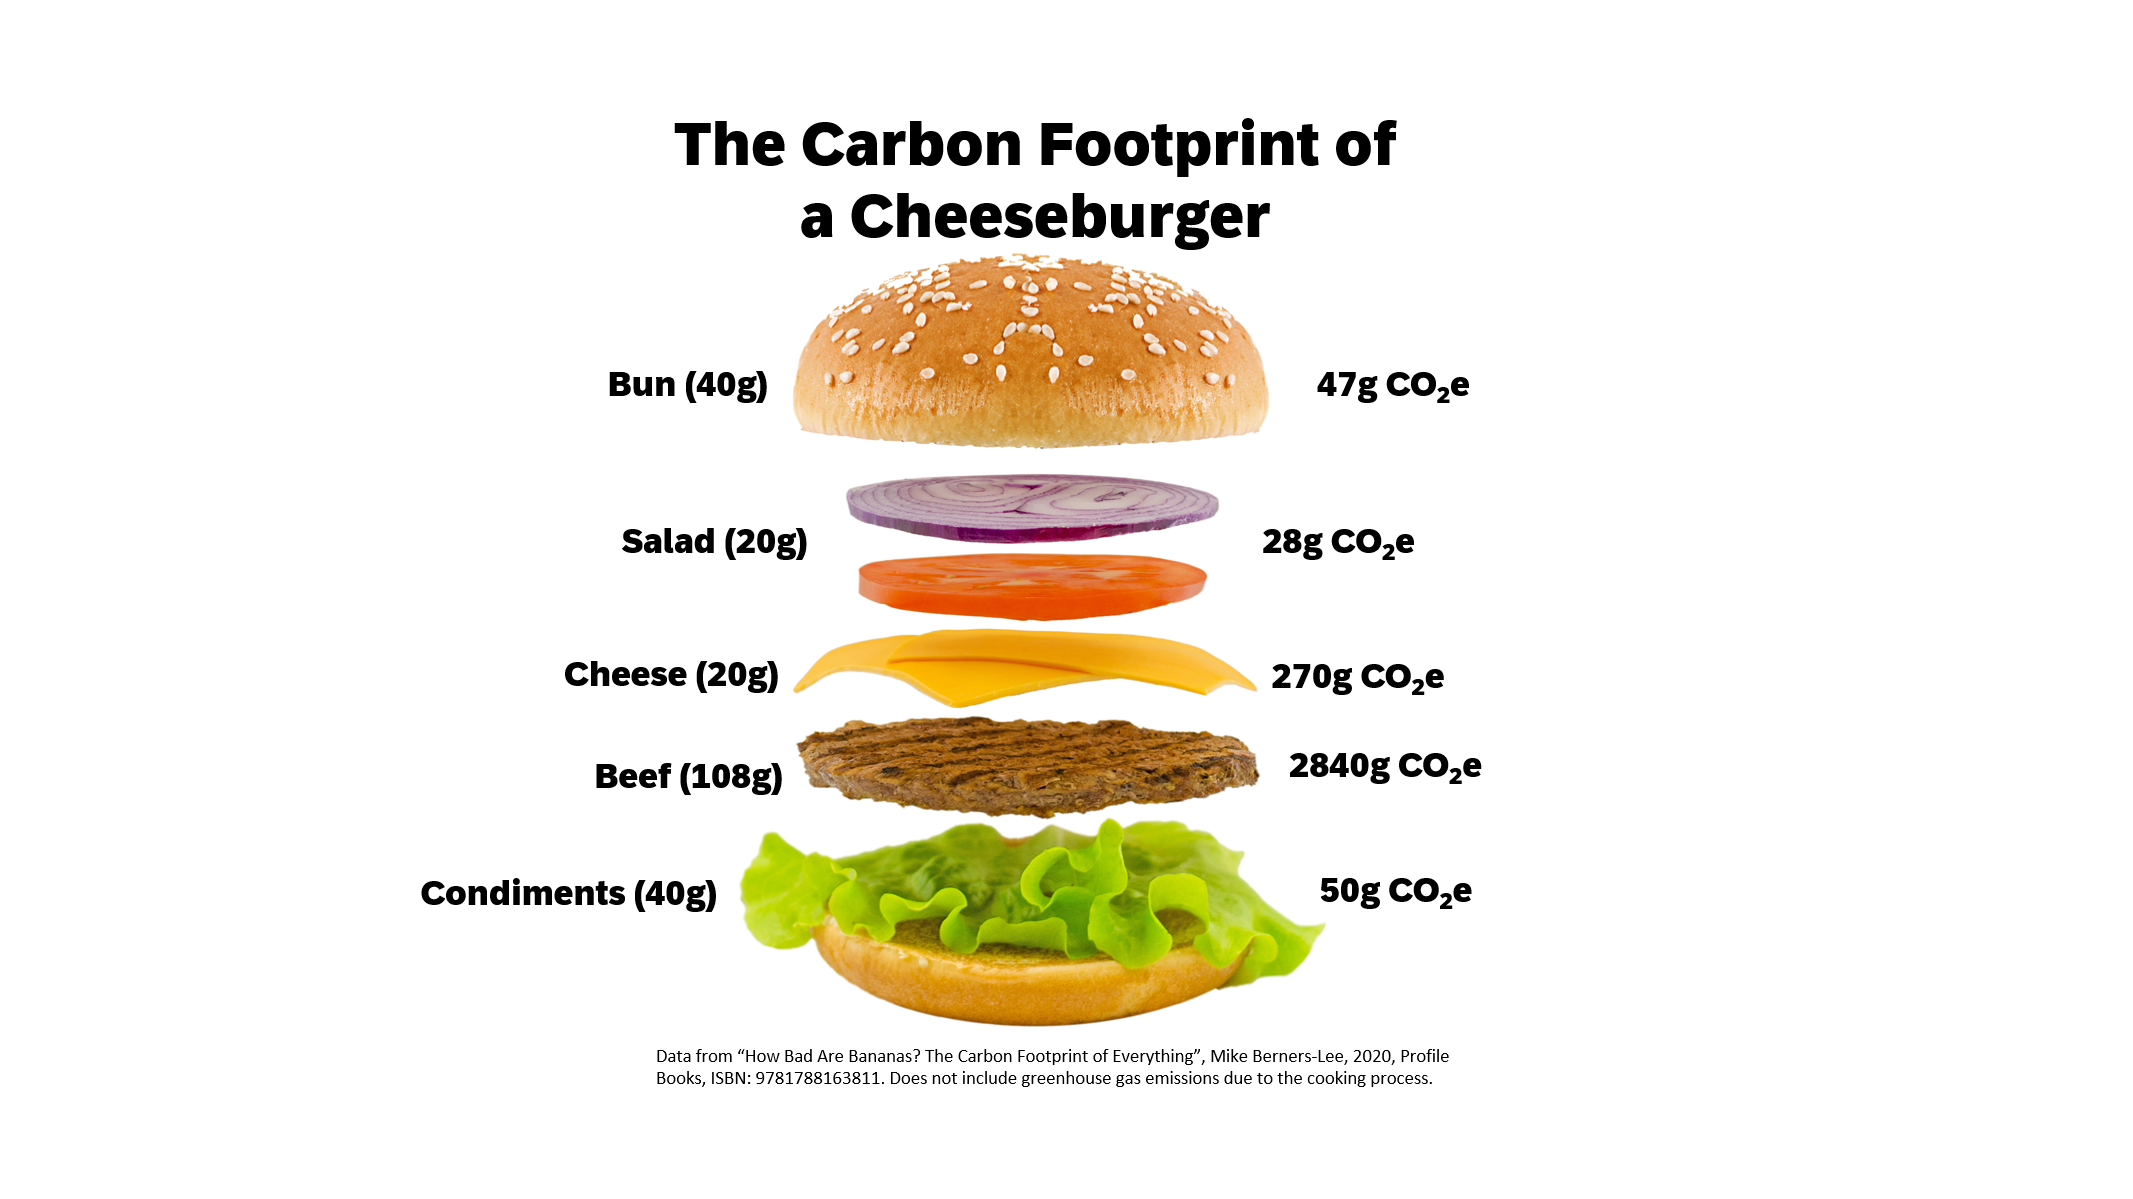 Carbon Footprint of a Hamburger